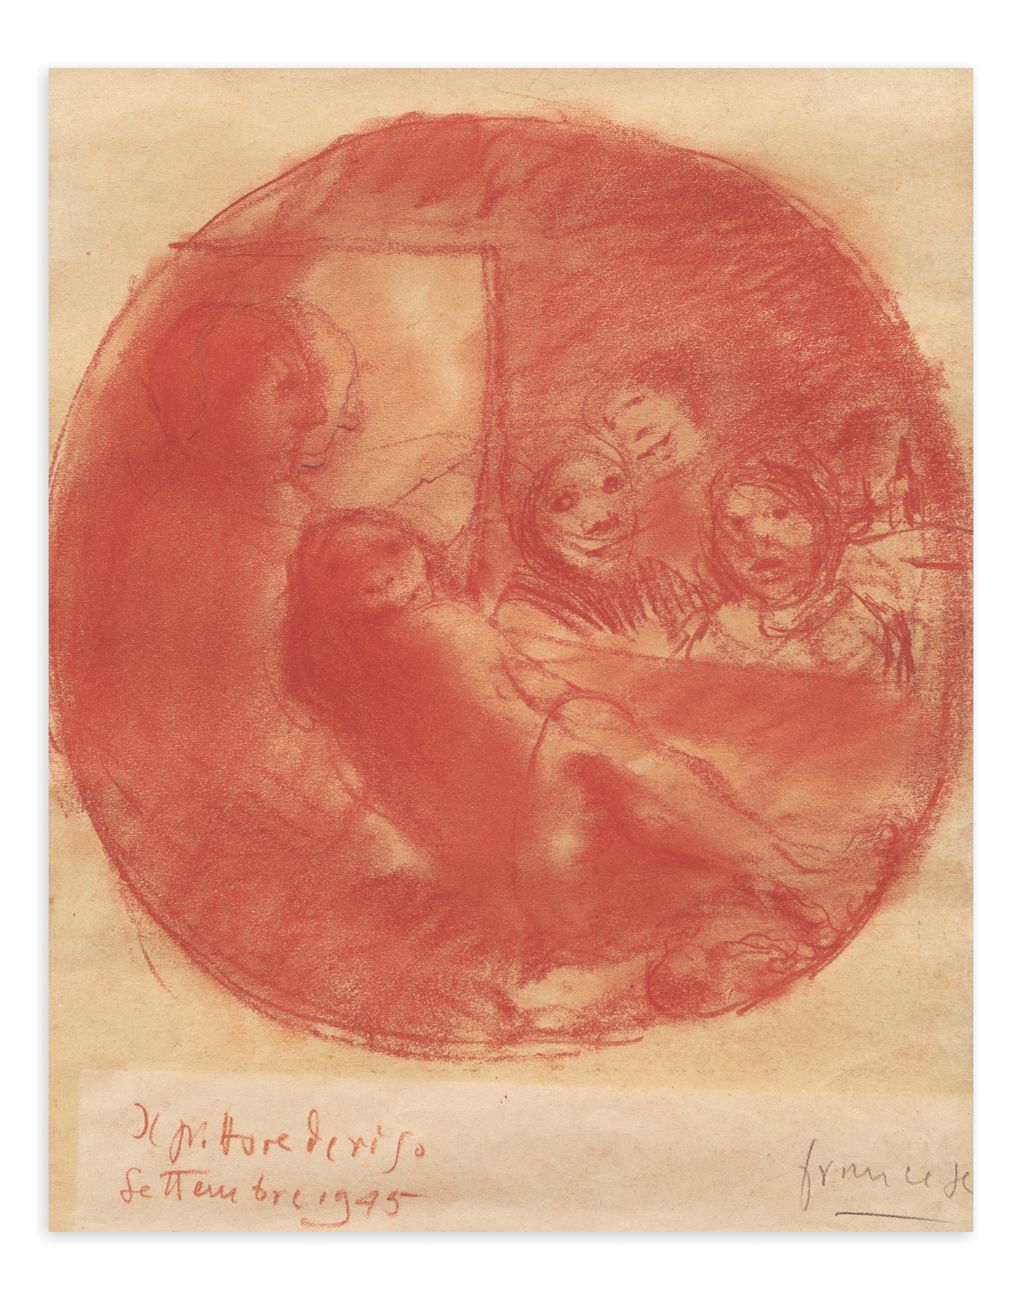 FRANCO FRANCESE (1920-1996) - Il pittore deriso, 1945 纸上炭笔

31x25厘米

正面的签名、标题和日期